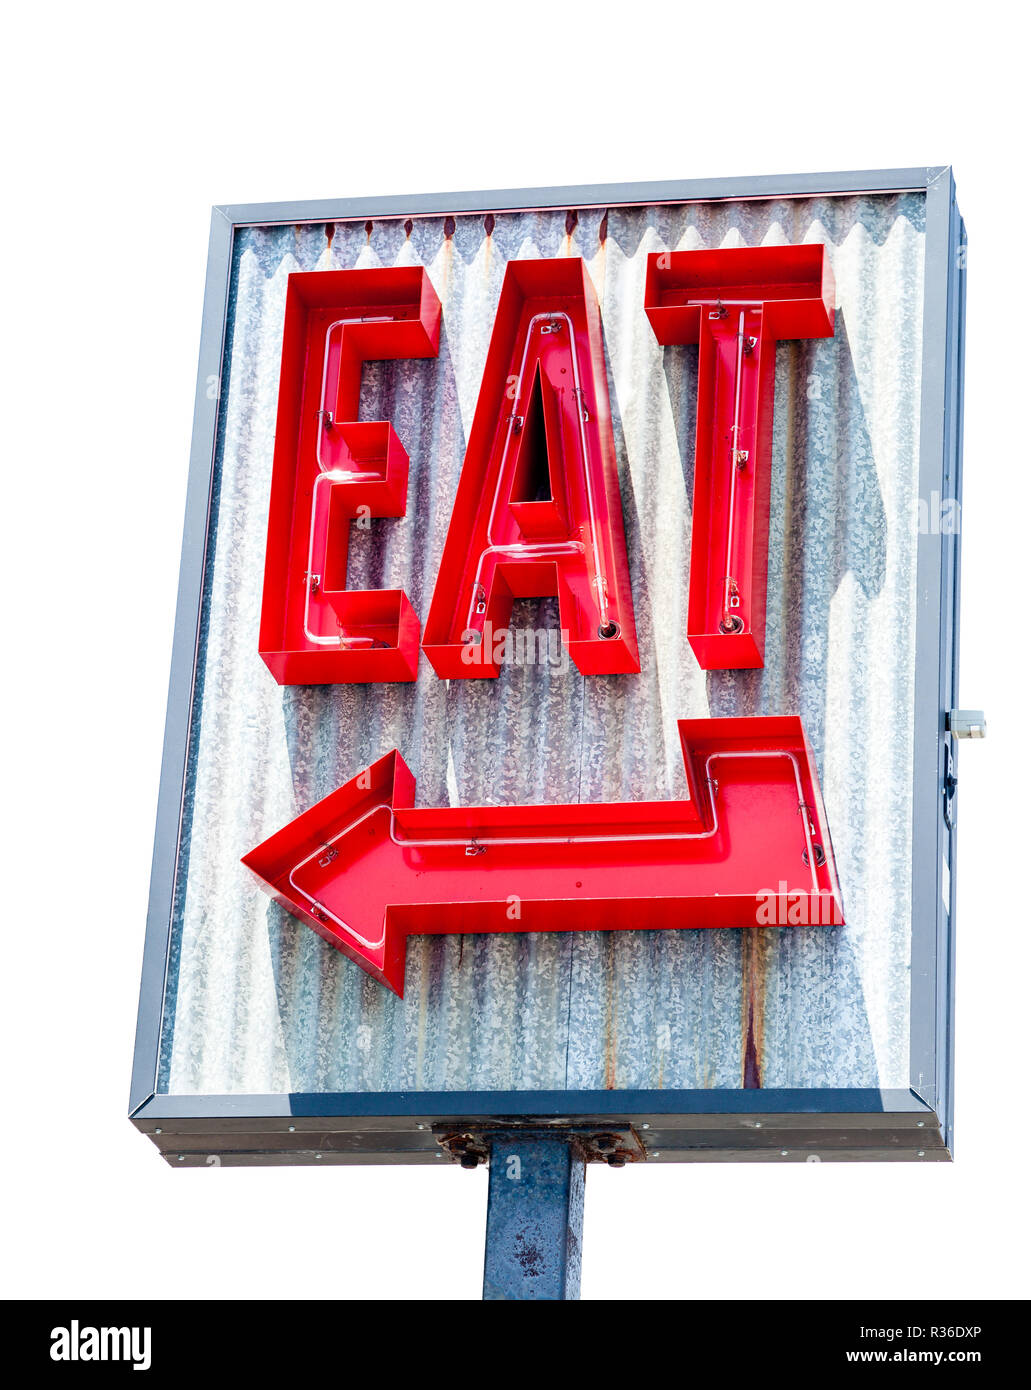 Restaurant sign reading Eat isolated on white background Stock Photo